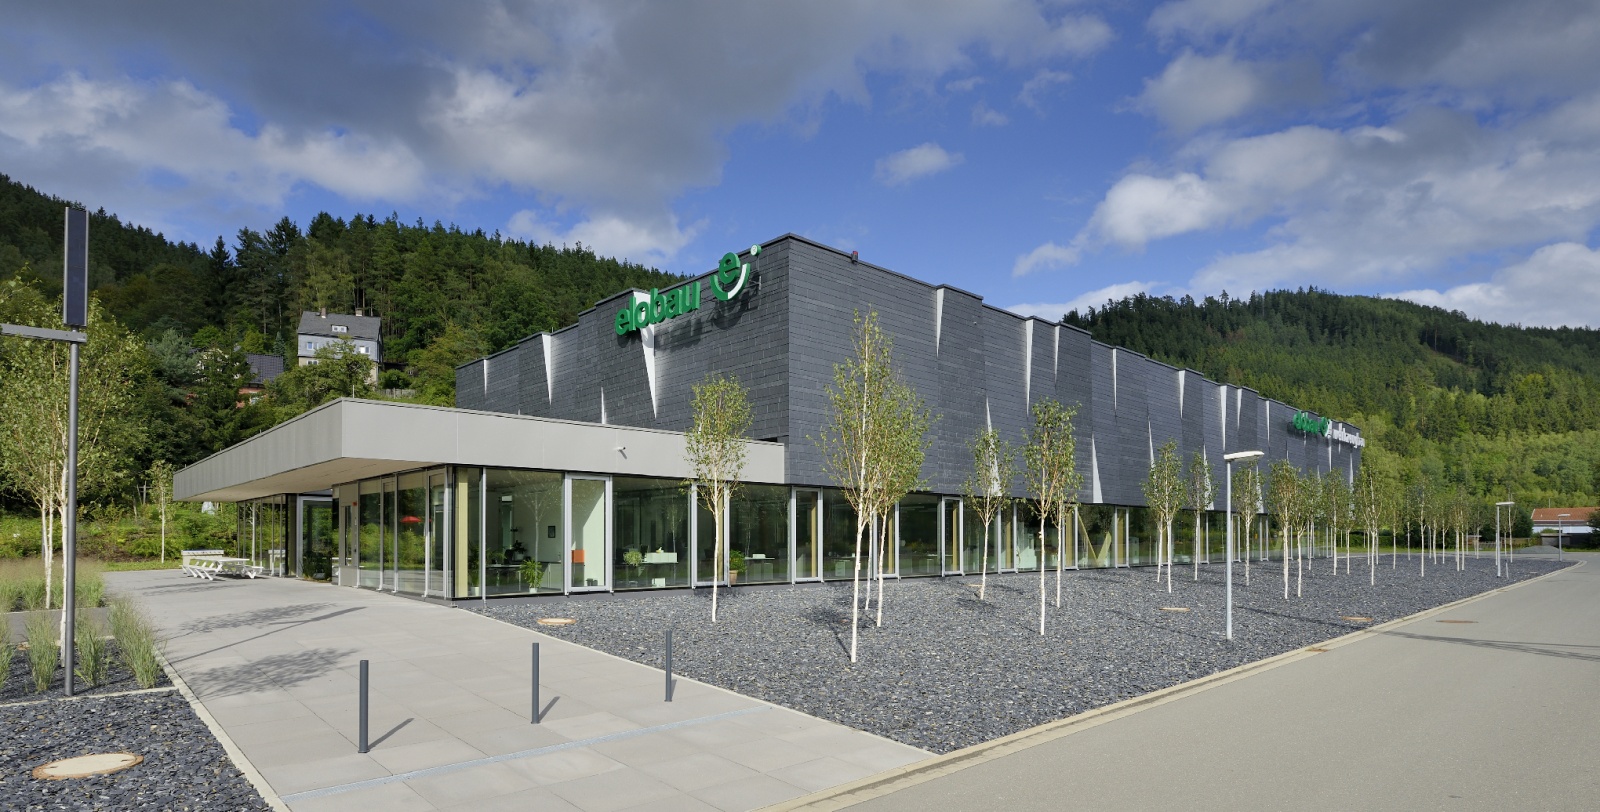 Betriebsgebäude in Probstzella, Südwesten, Zugang, Verwaltung, Birkenhain, Bild: Fotodesign Peters, Amerang